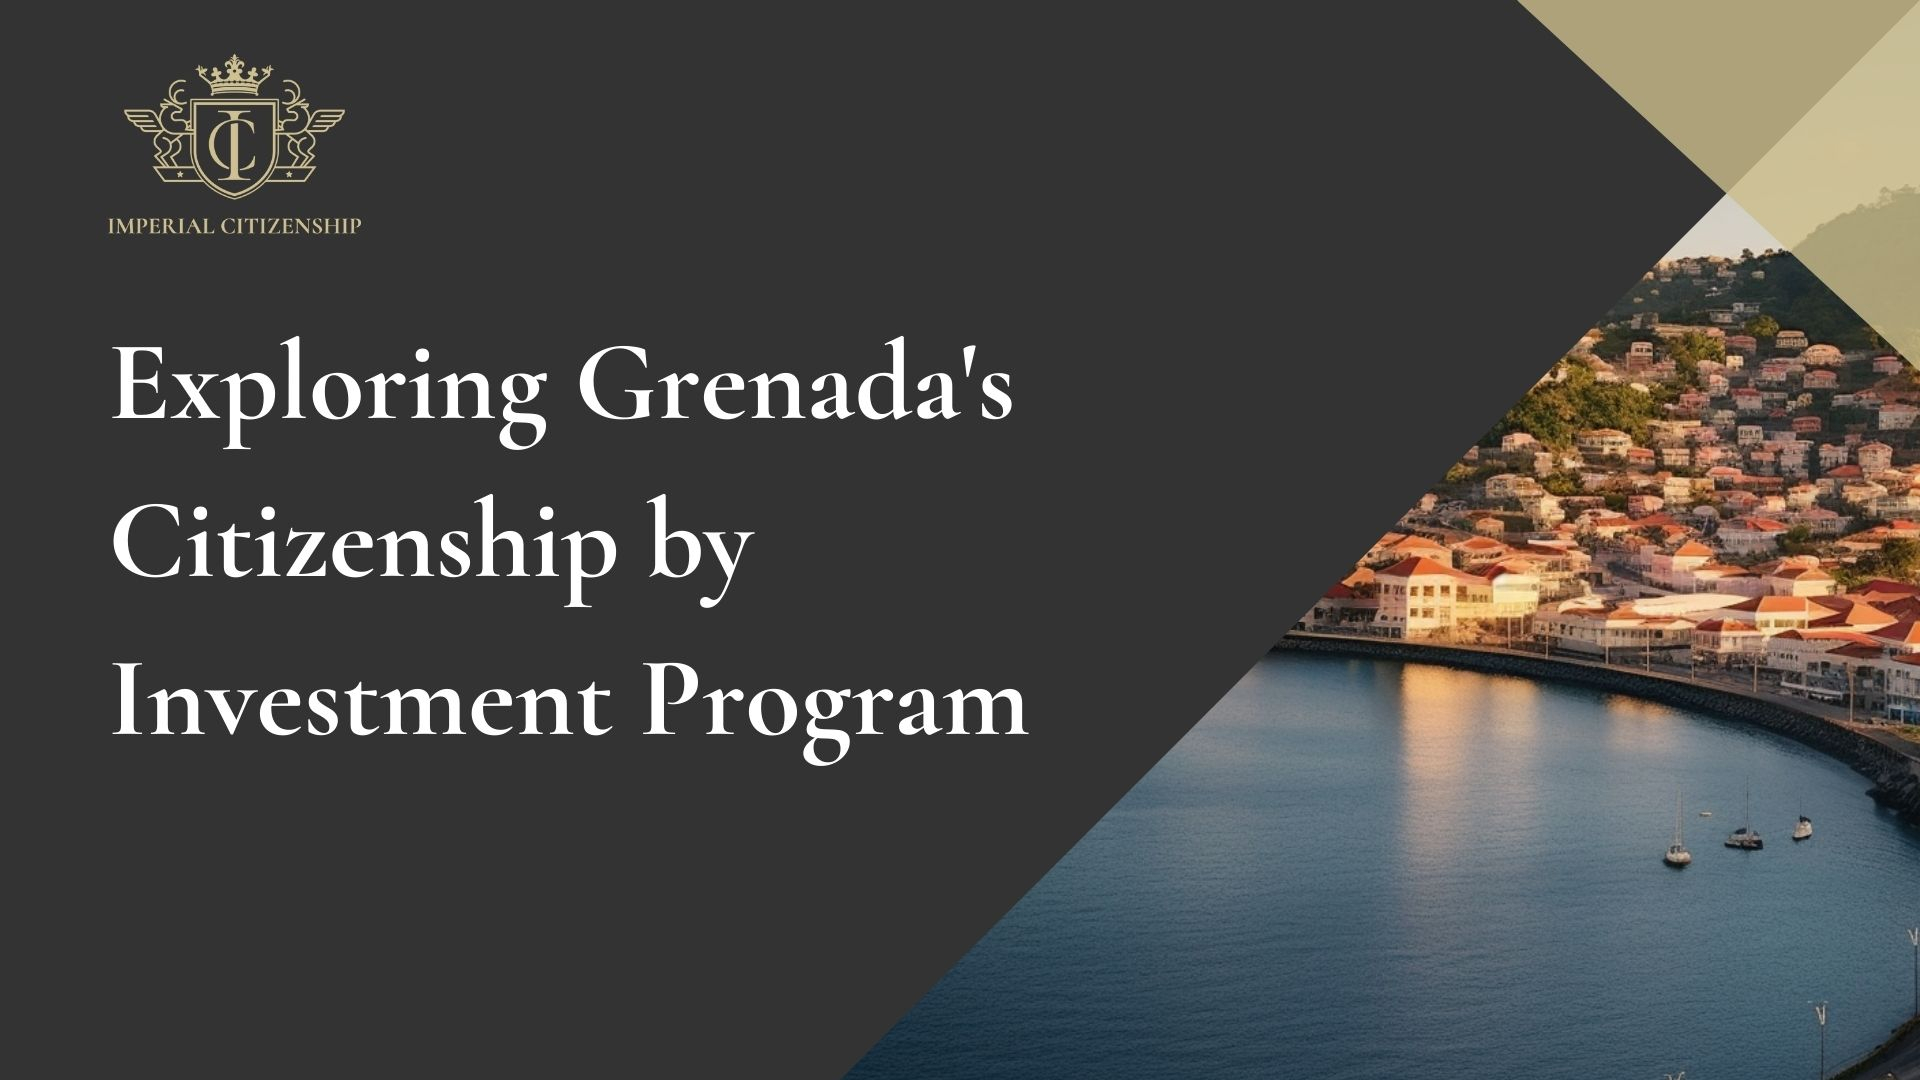 Grenada's Citizenship by Investment Program